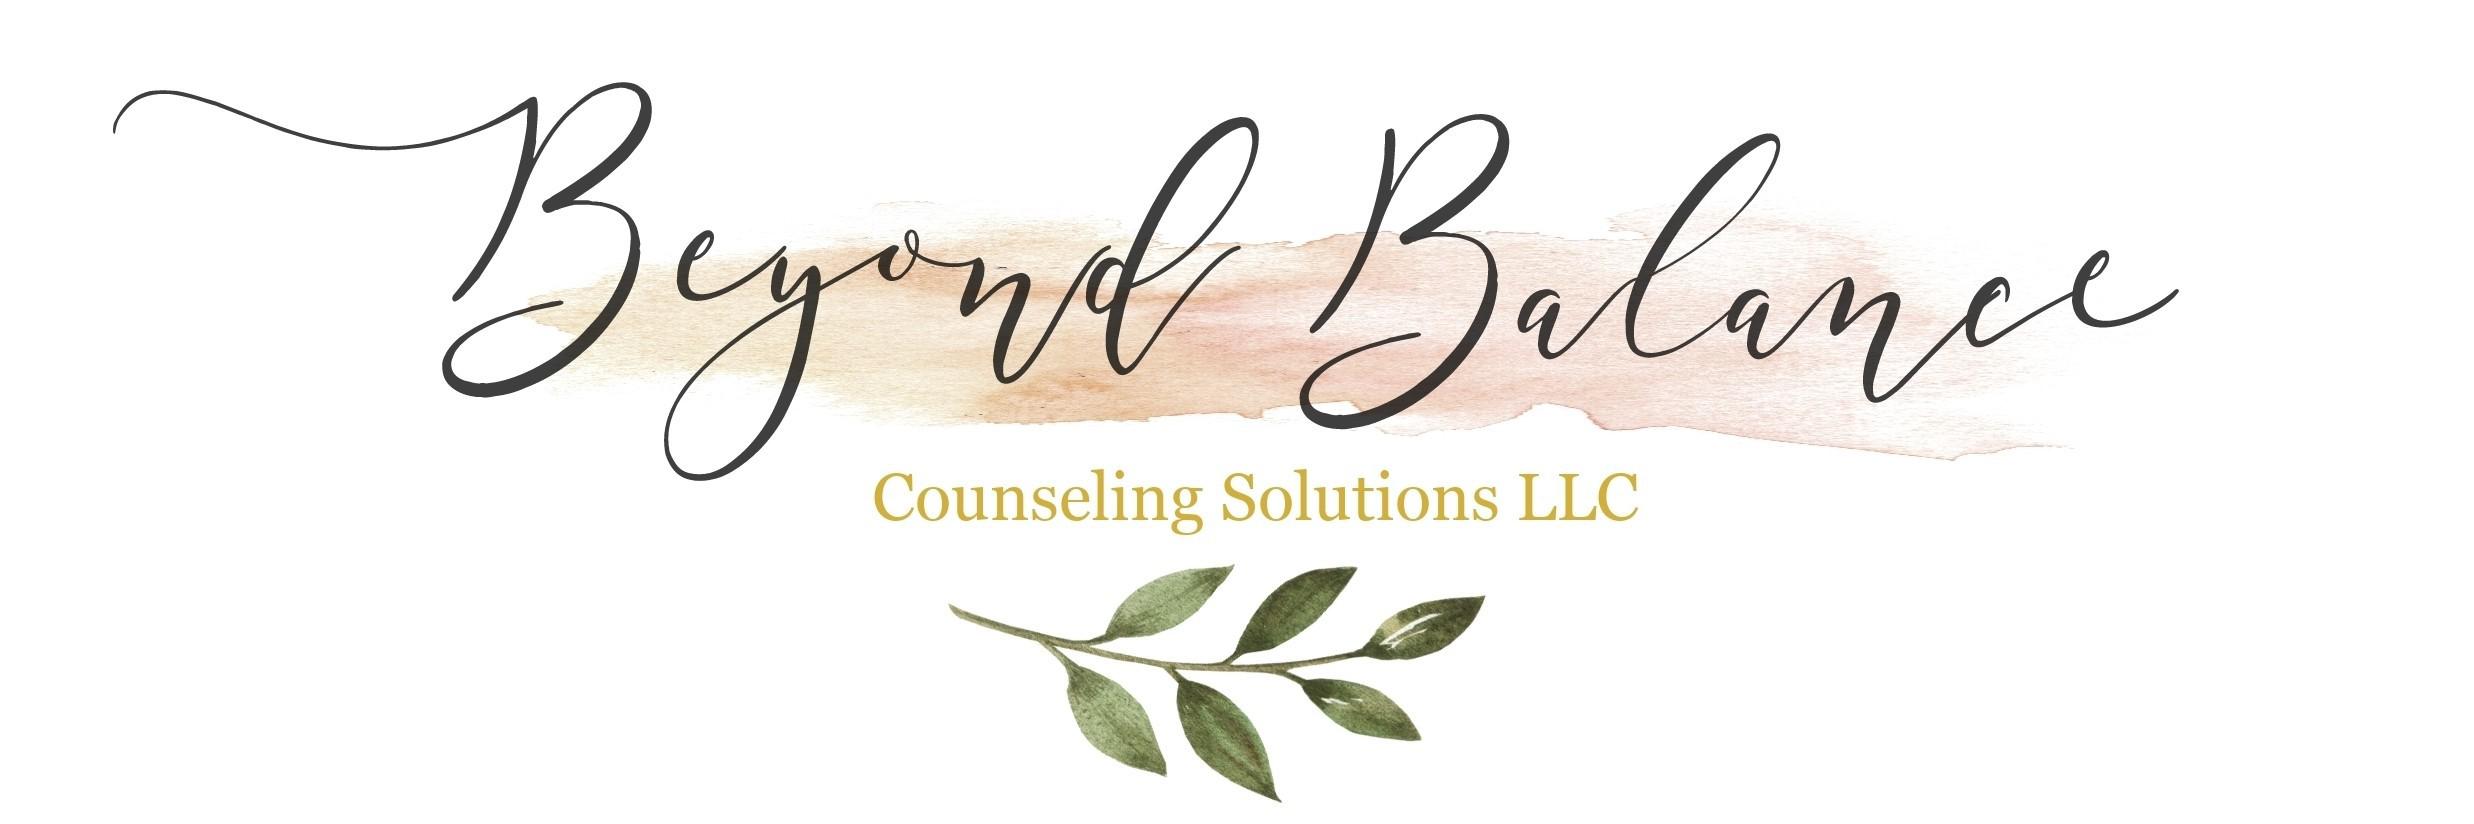 Beyond Balance Counseling Solutions LLC Logo